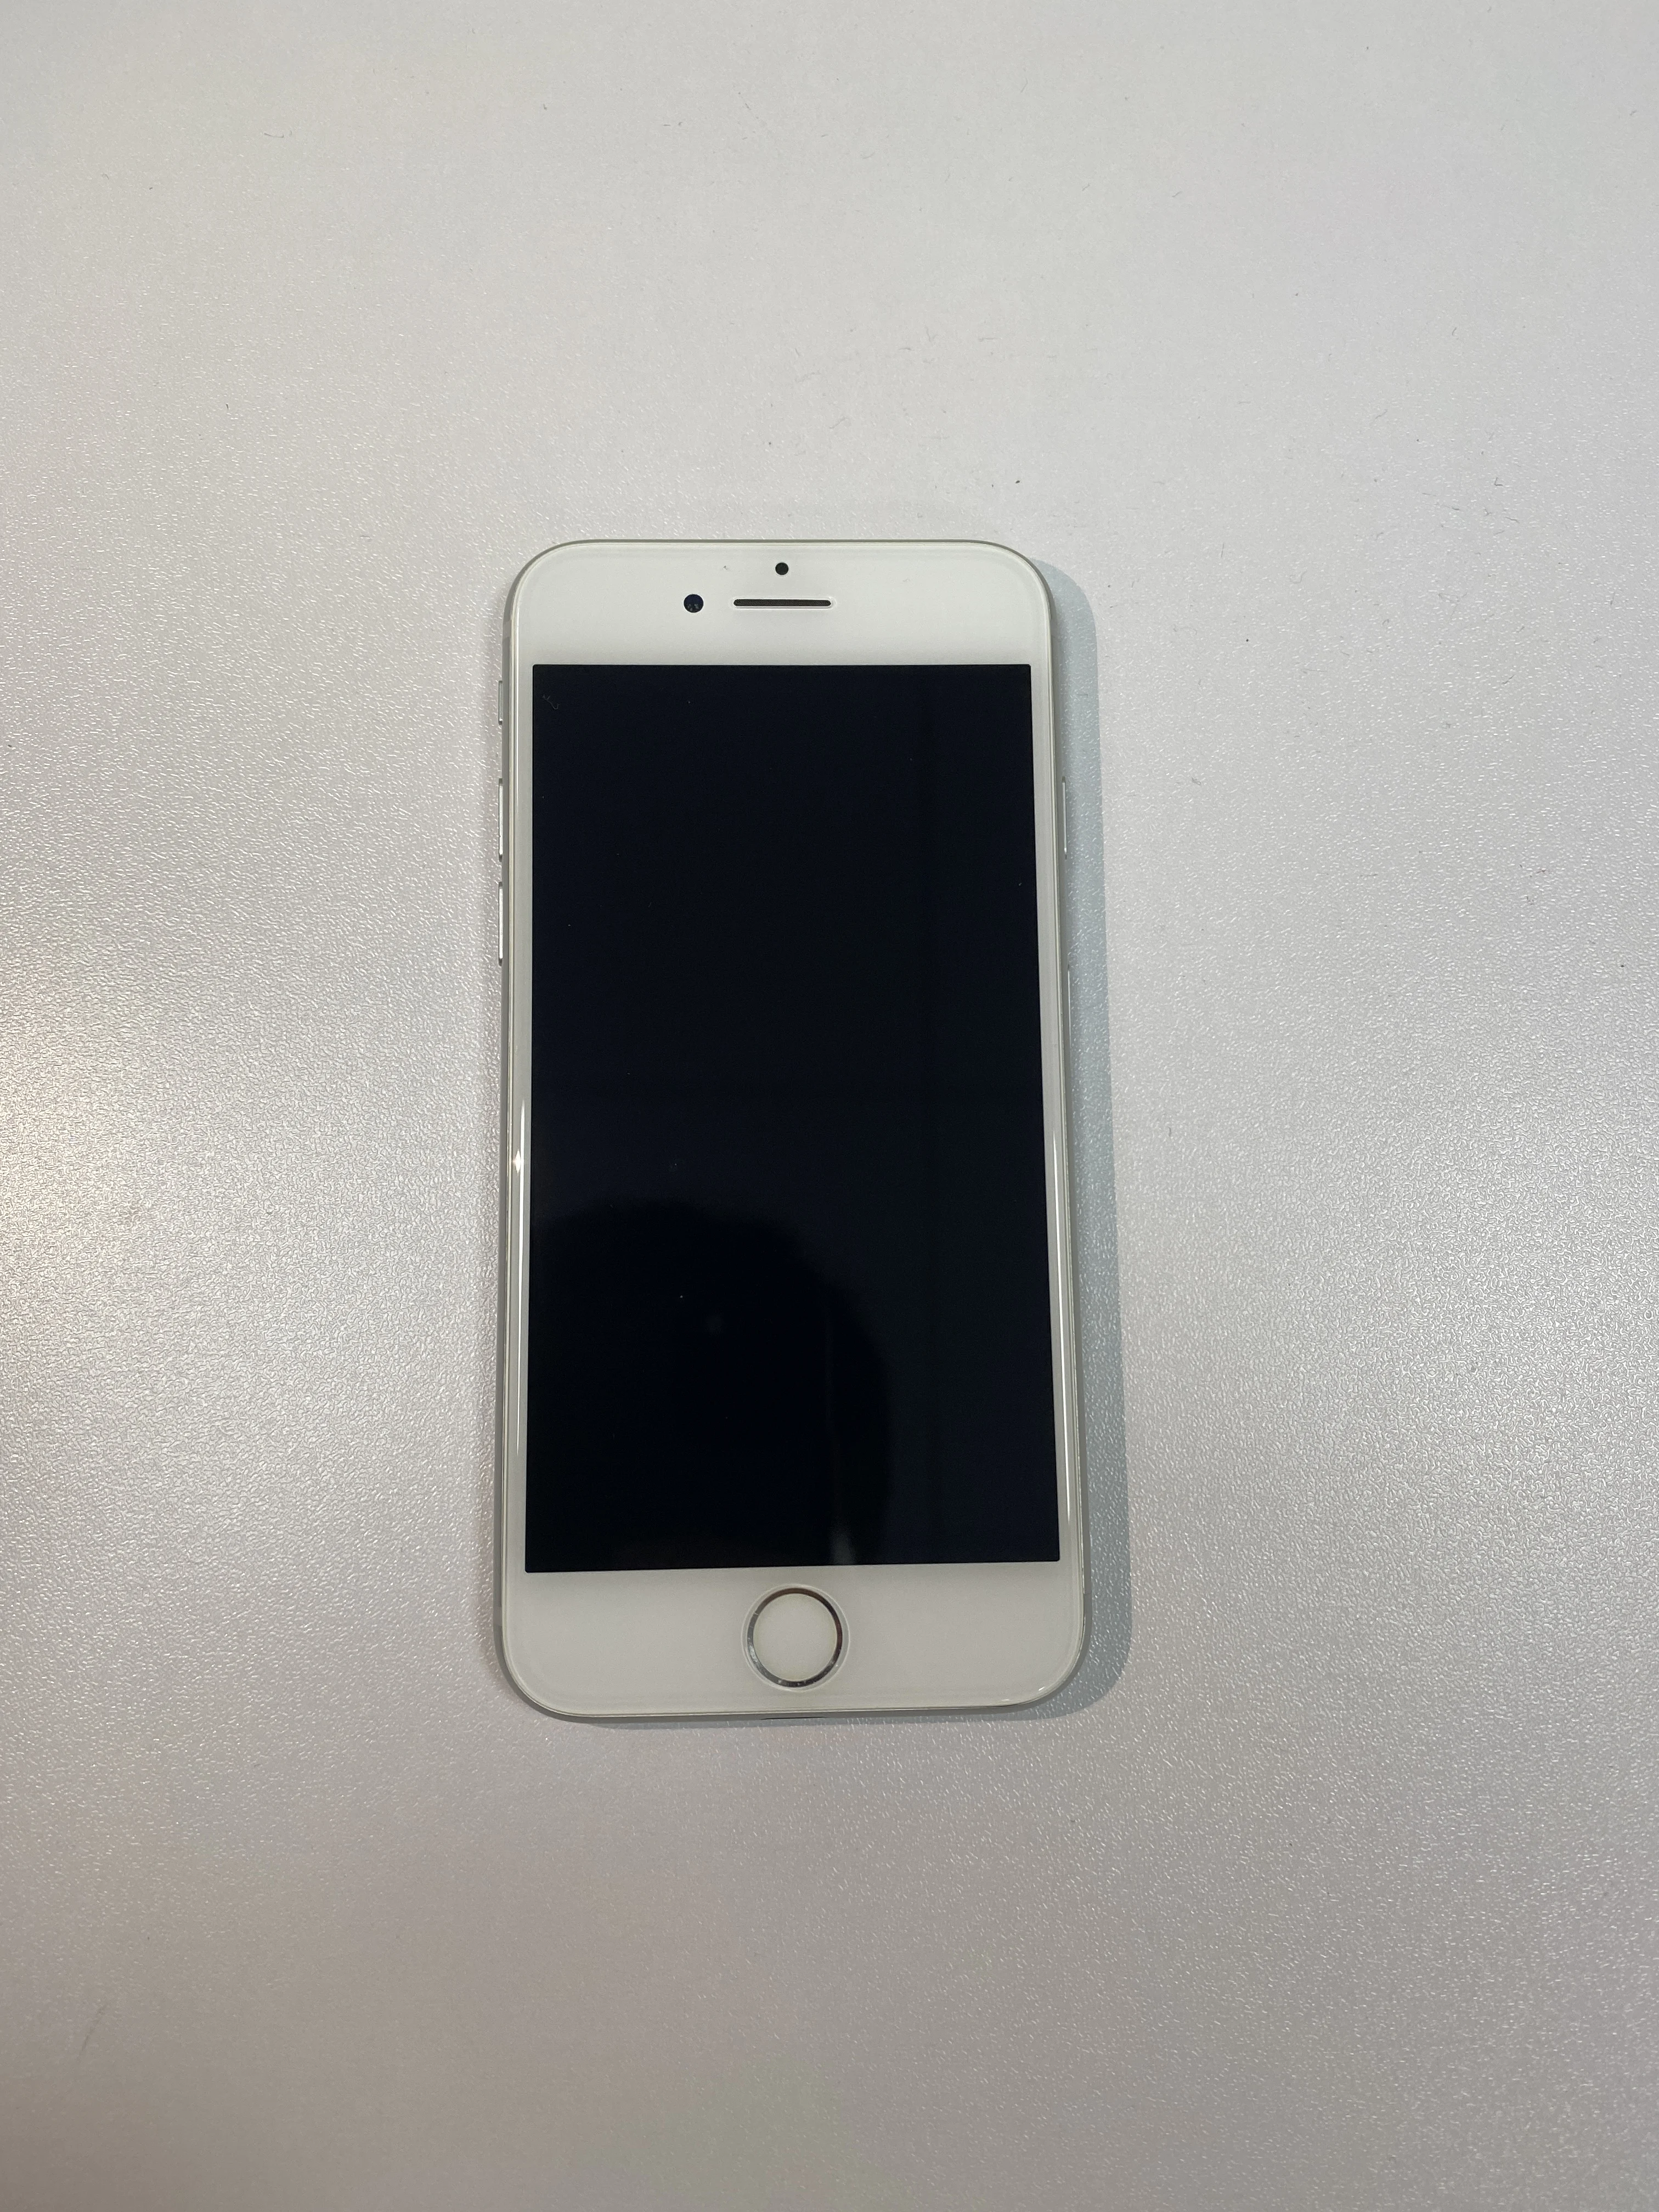 Apple Original iPhone 8 Genuine GSM Unlocked A11 Bionic iOS Hexa-Core 2GB RAM 64GB/256GB ROM 4.7